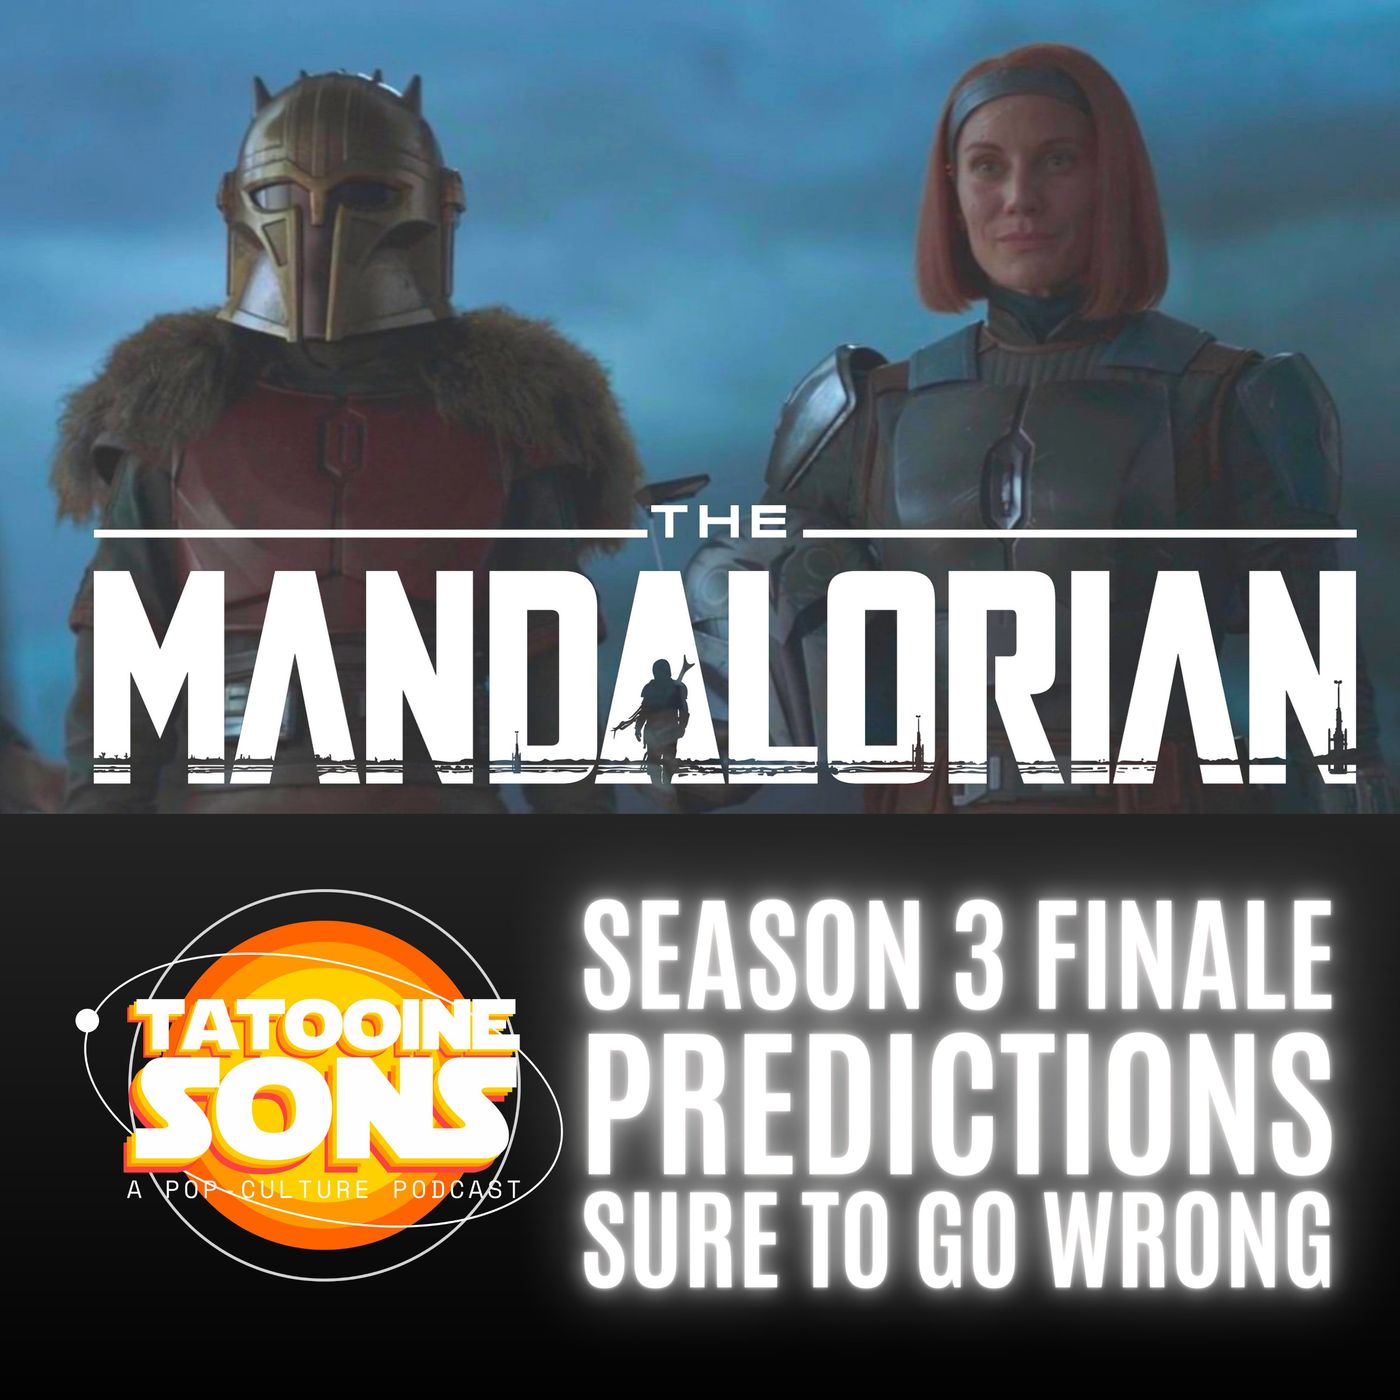 The Mandalorian Season 3 Finale ”Predictions Sure to Go Wrong”